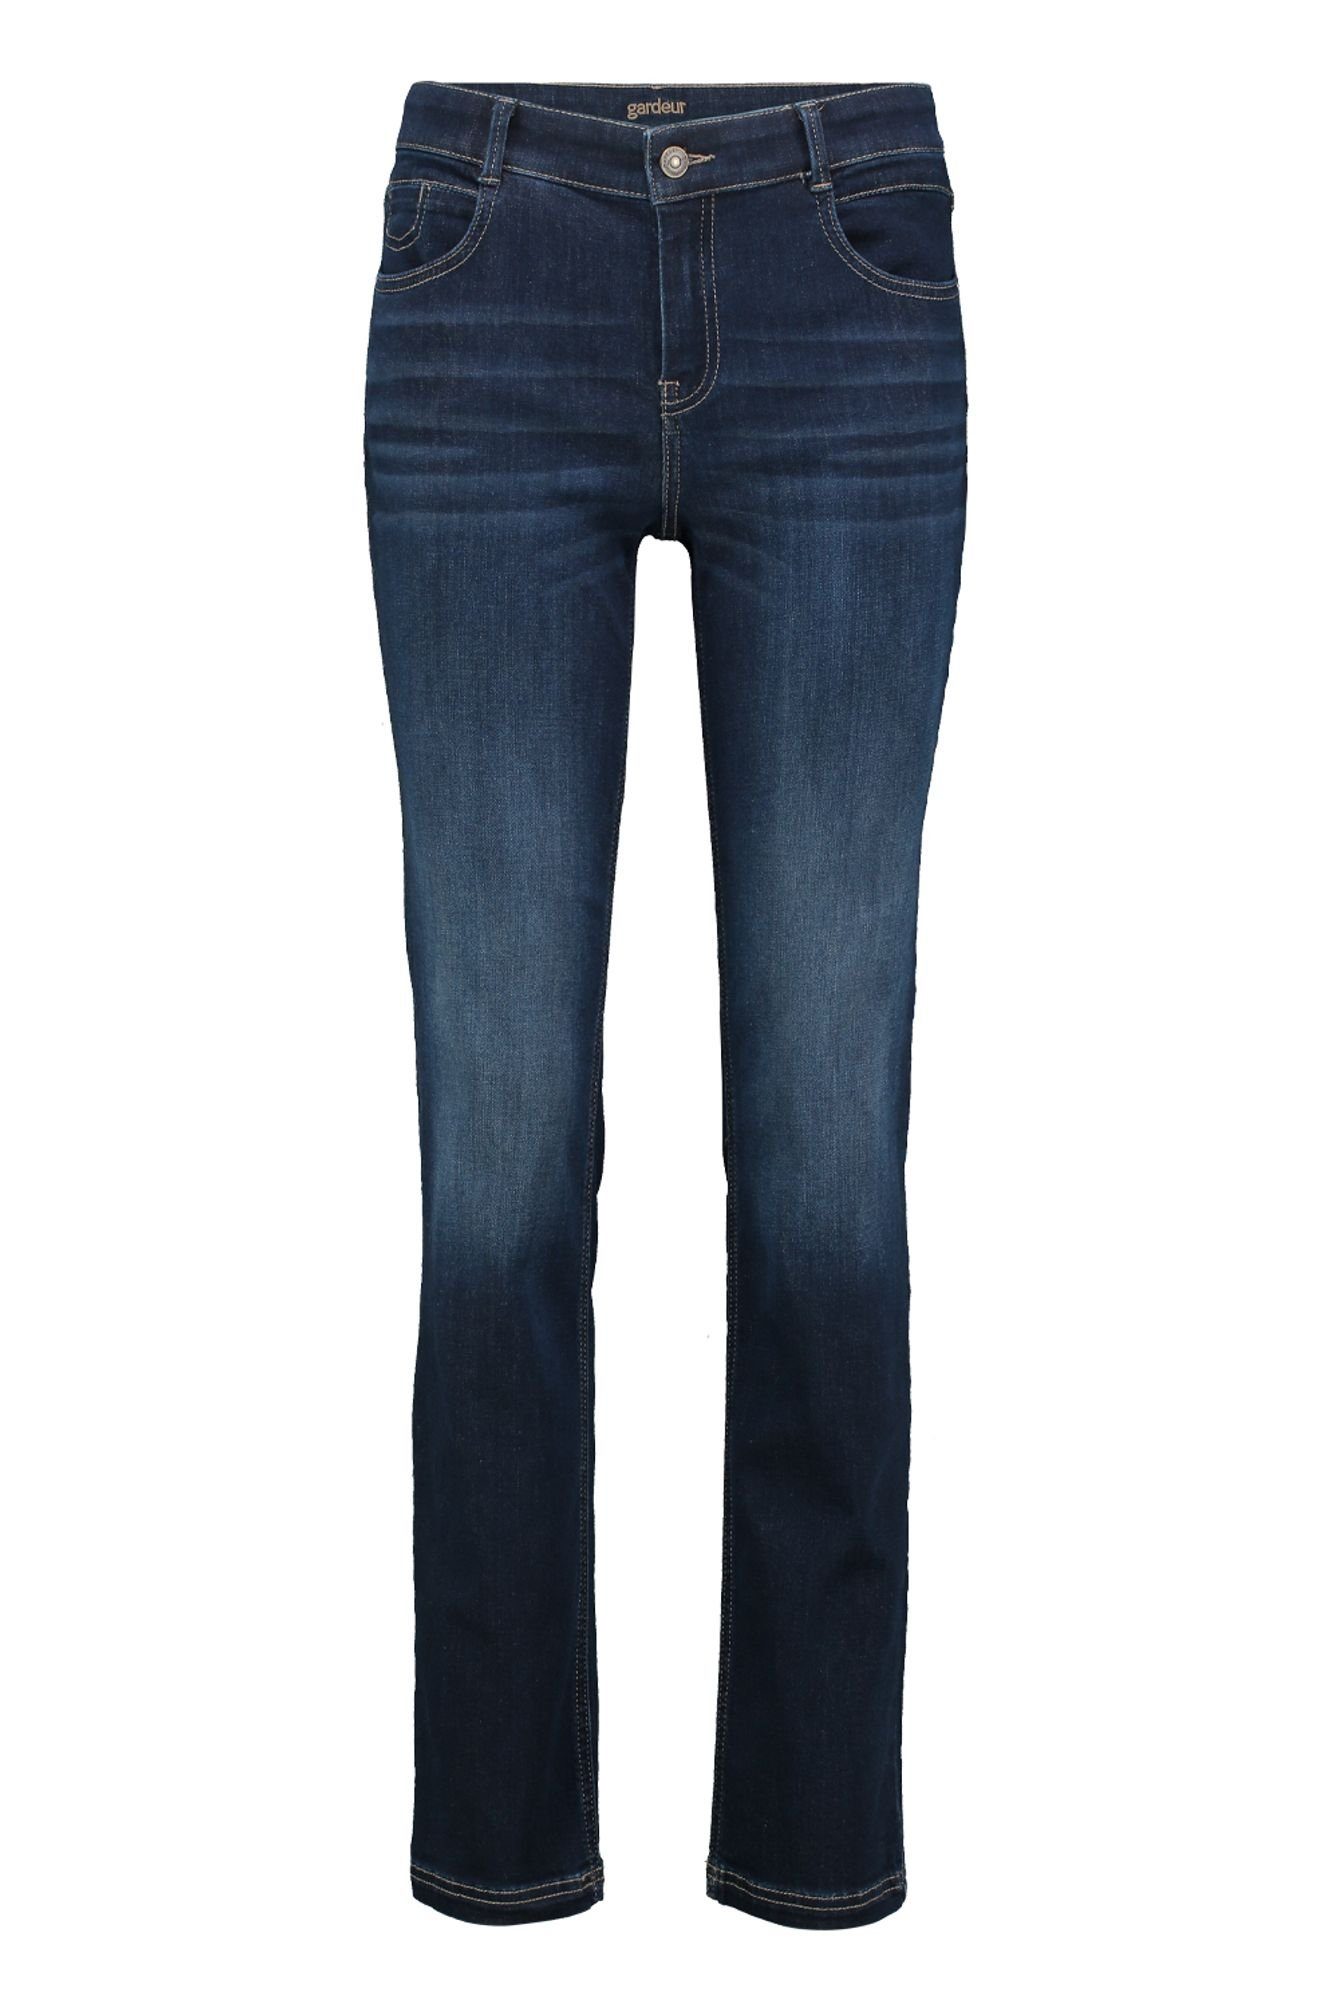 Atelier GARDEUR 5-Pocket-Jeans Vicky743 blau (7169)